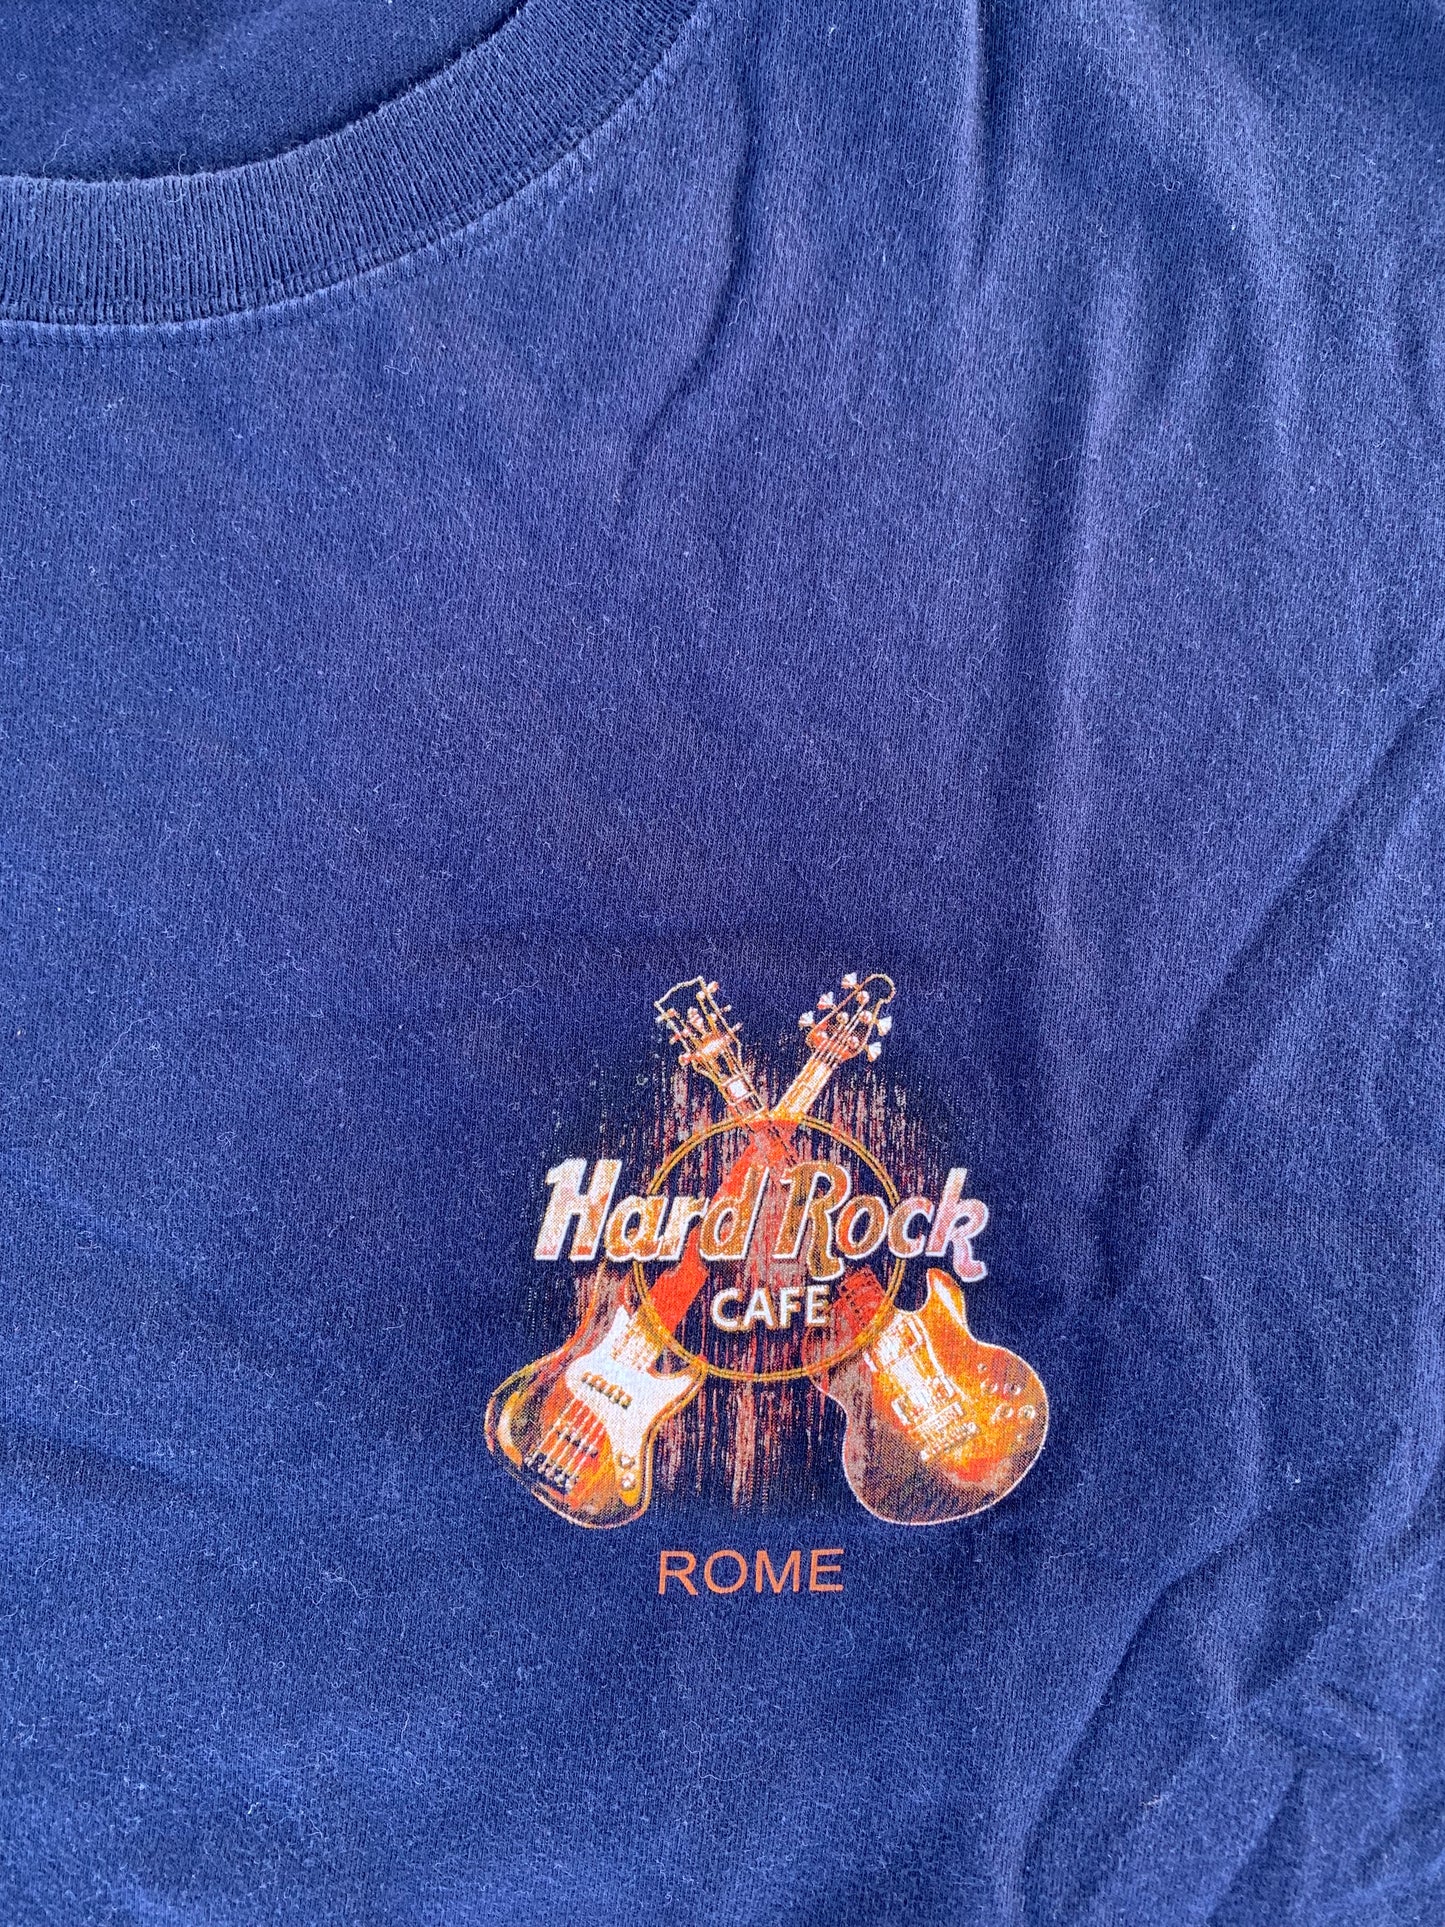 Hard Rock Cafe Rome Tee